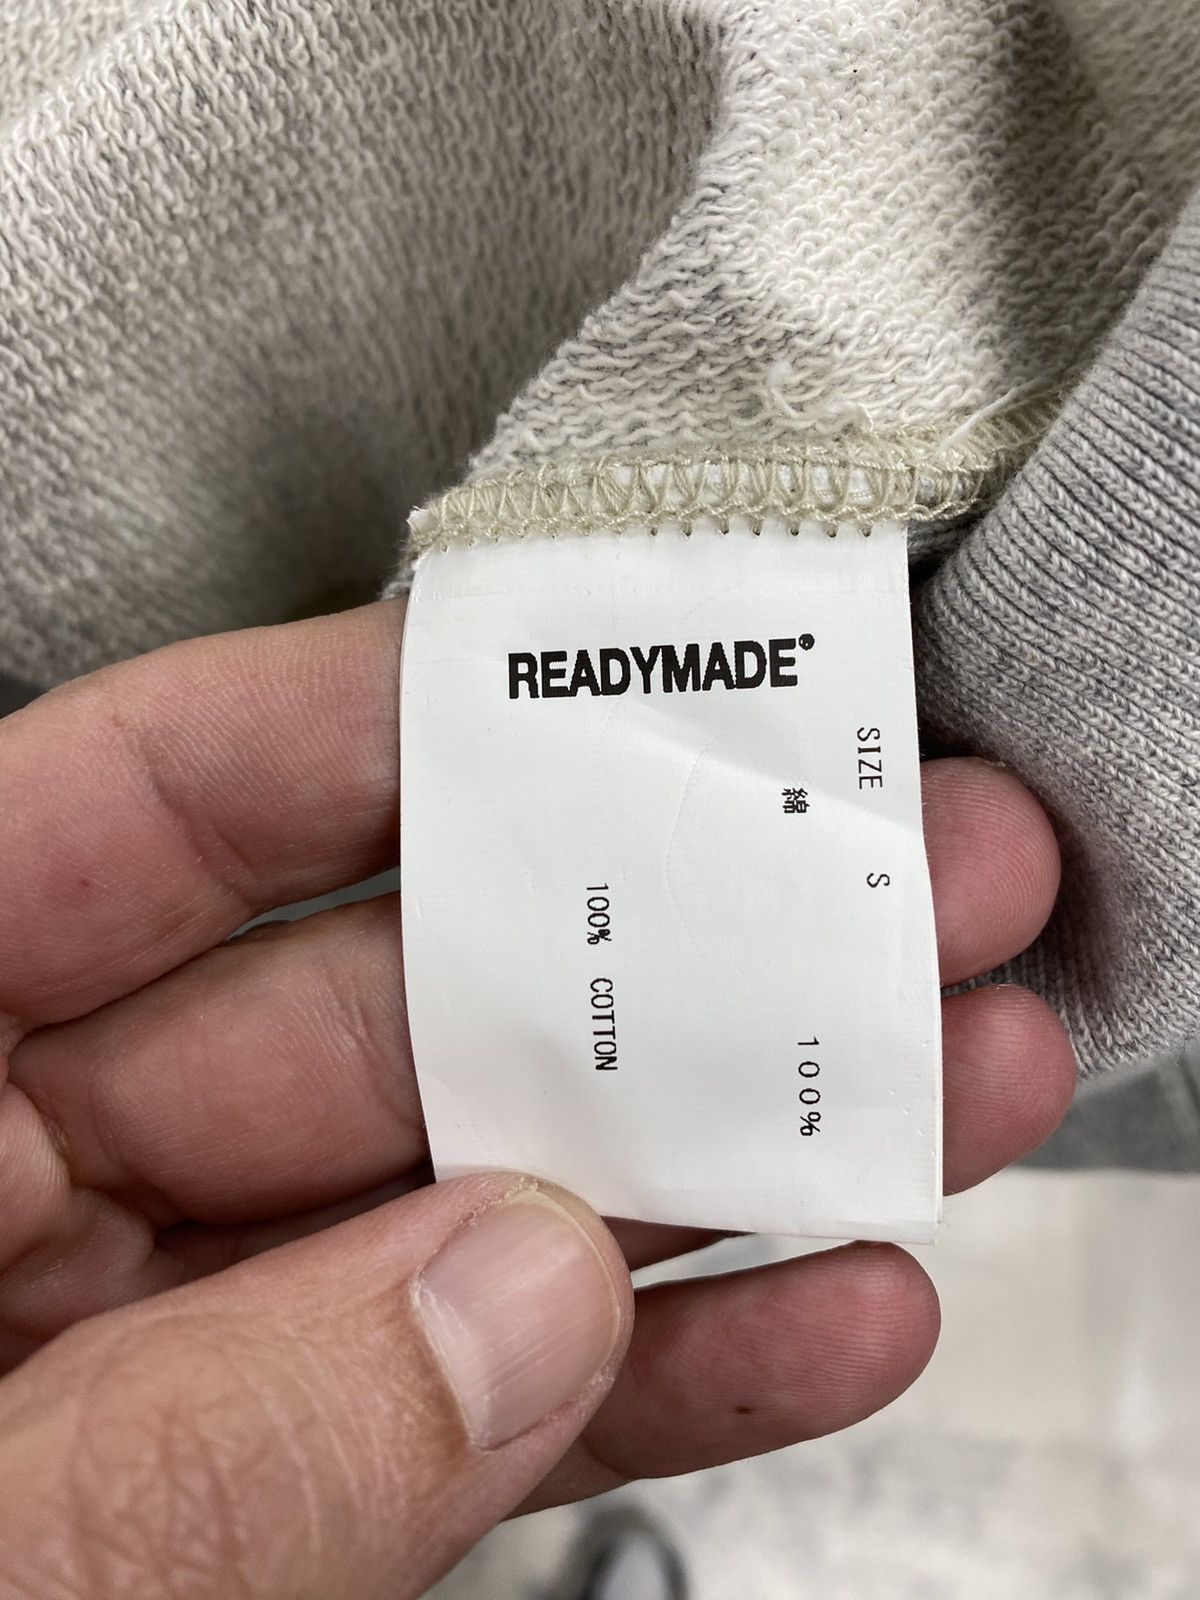 READYMADE Readymade x Denim Tears cotton wreath hoodie grey small Size US S / EU 44-46 / 1 - 10 Thumbnail